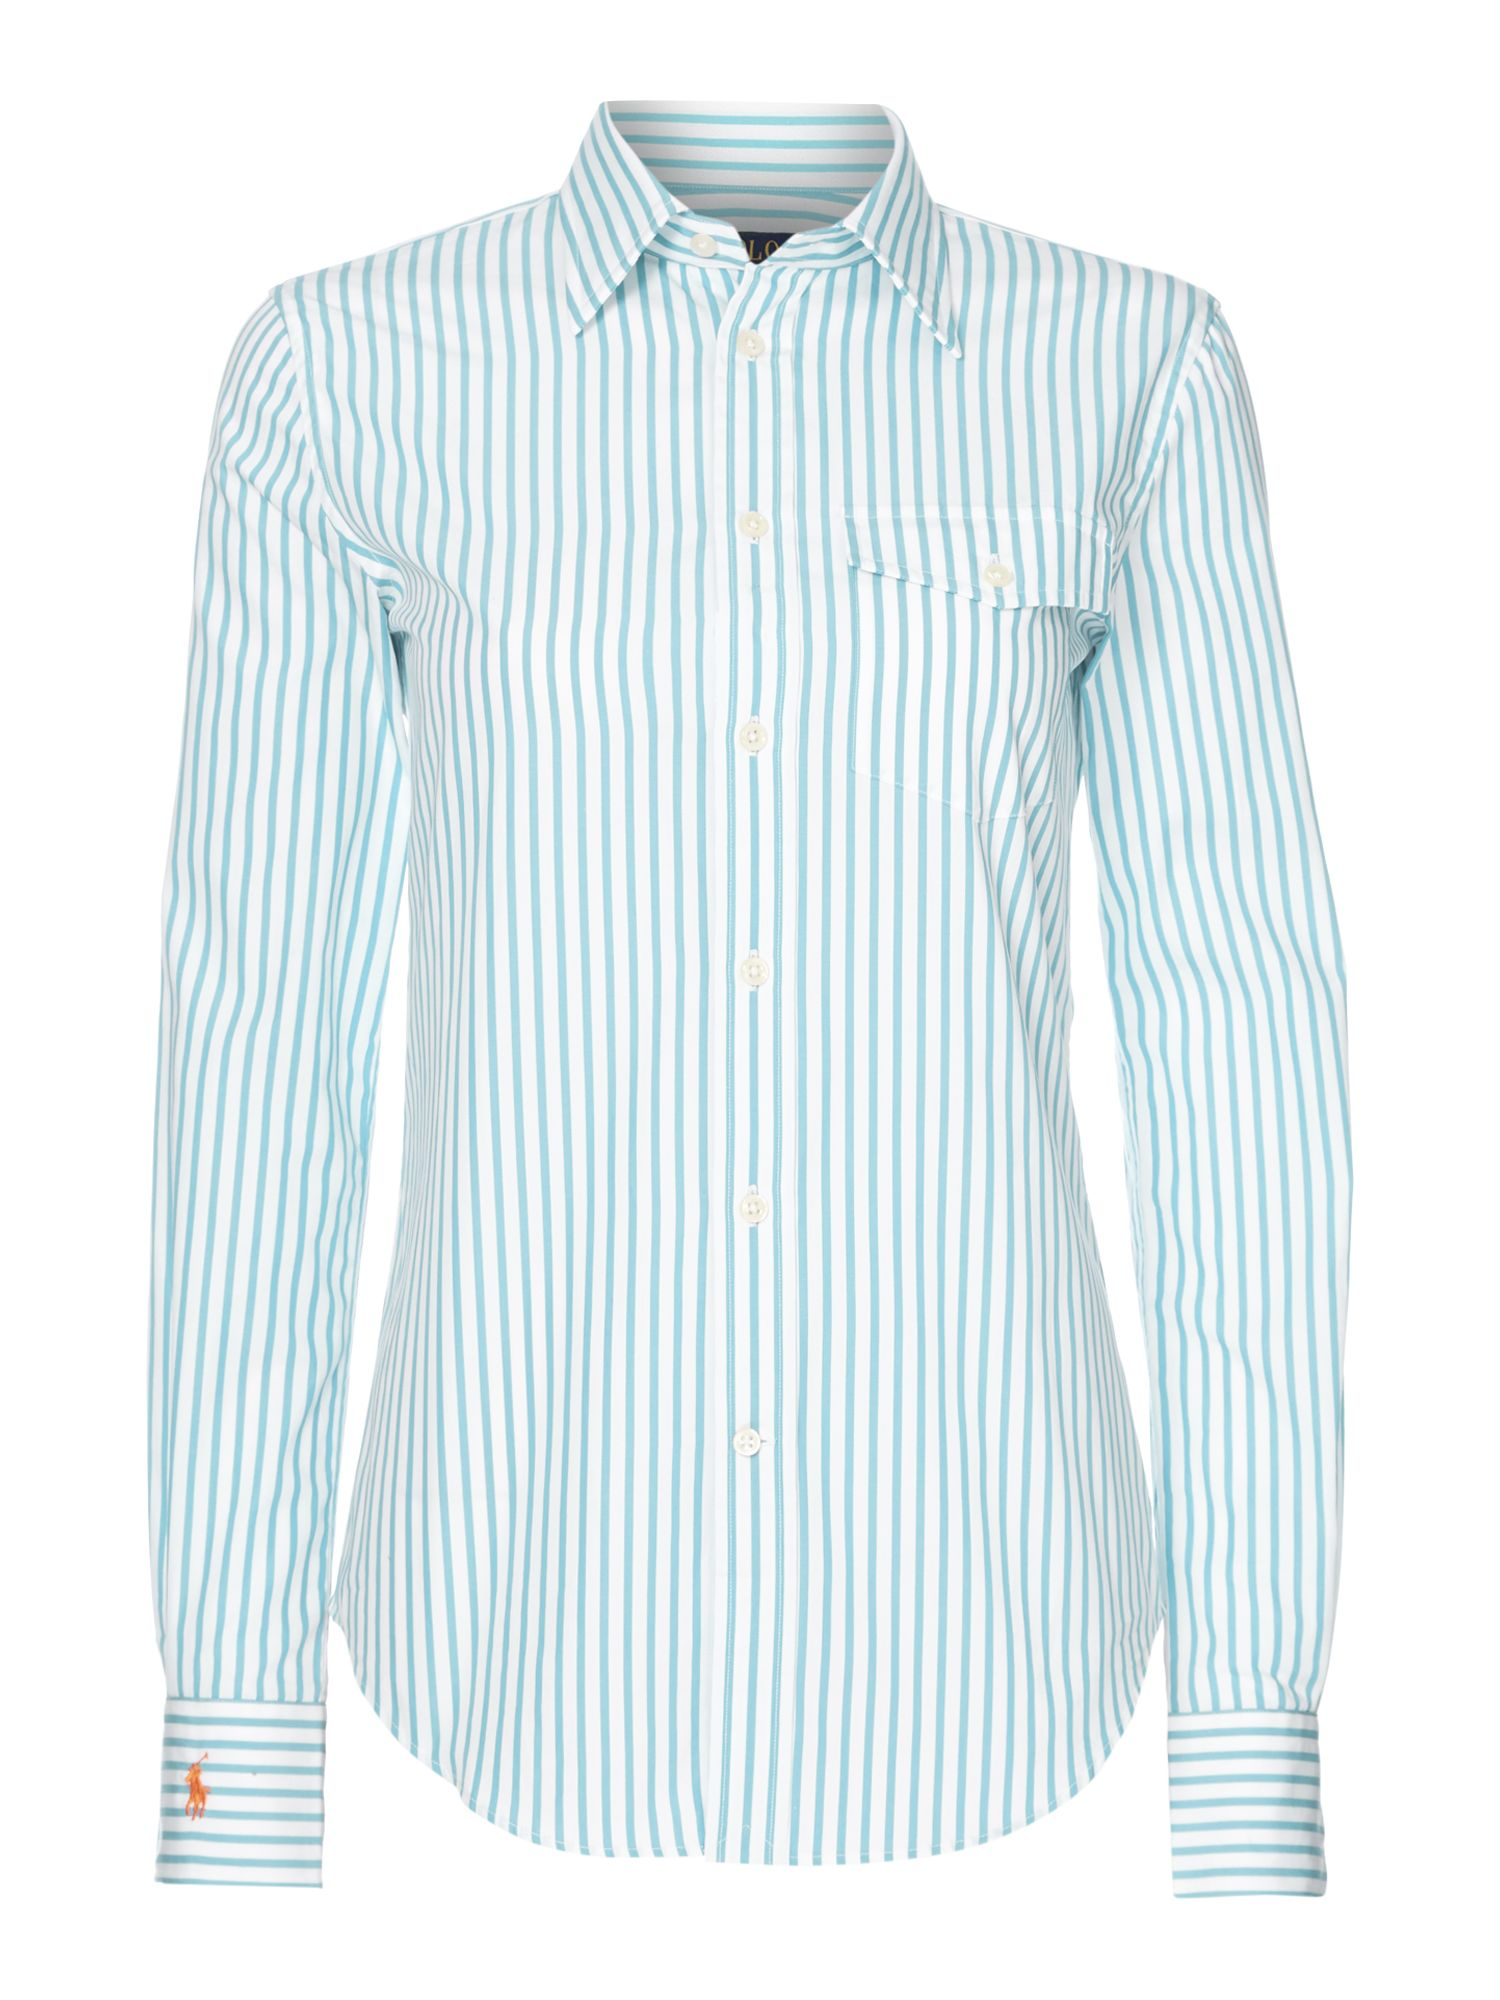 Polo ralph lauren Long Sleeved Striped Shirt in Blue | Lyst